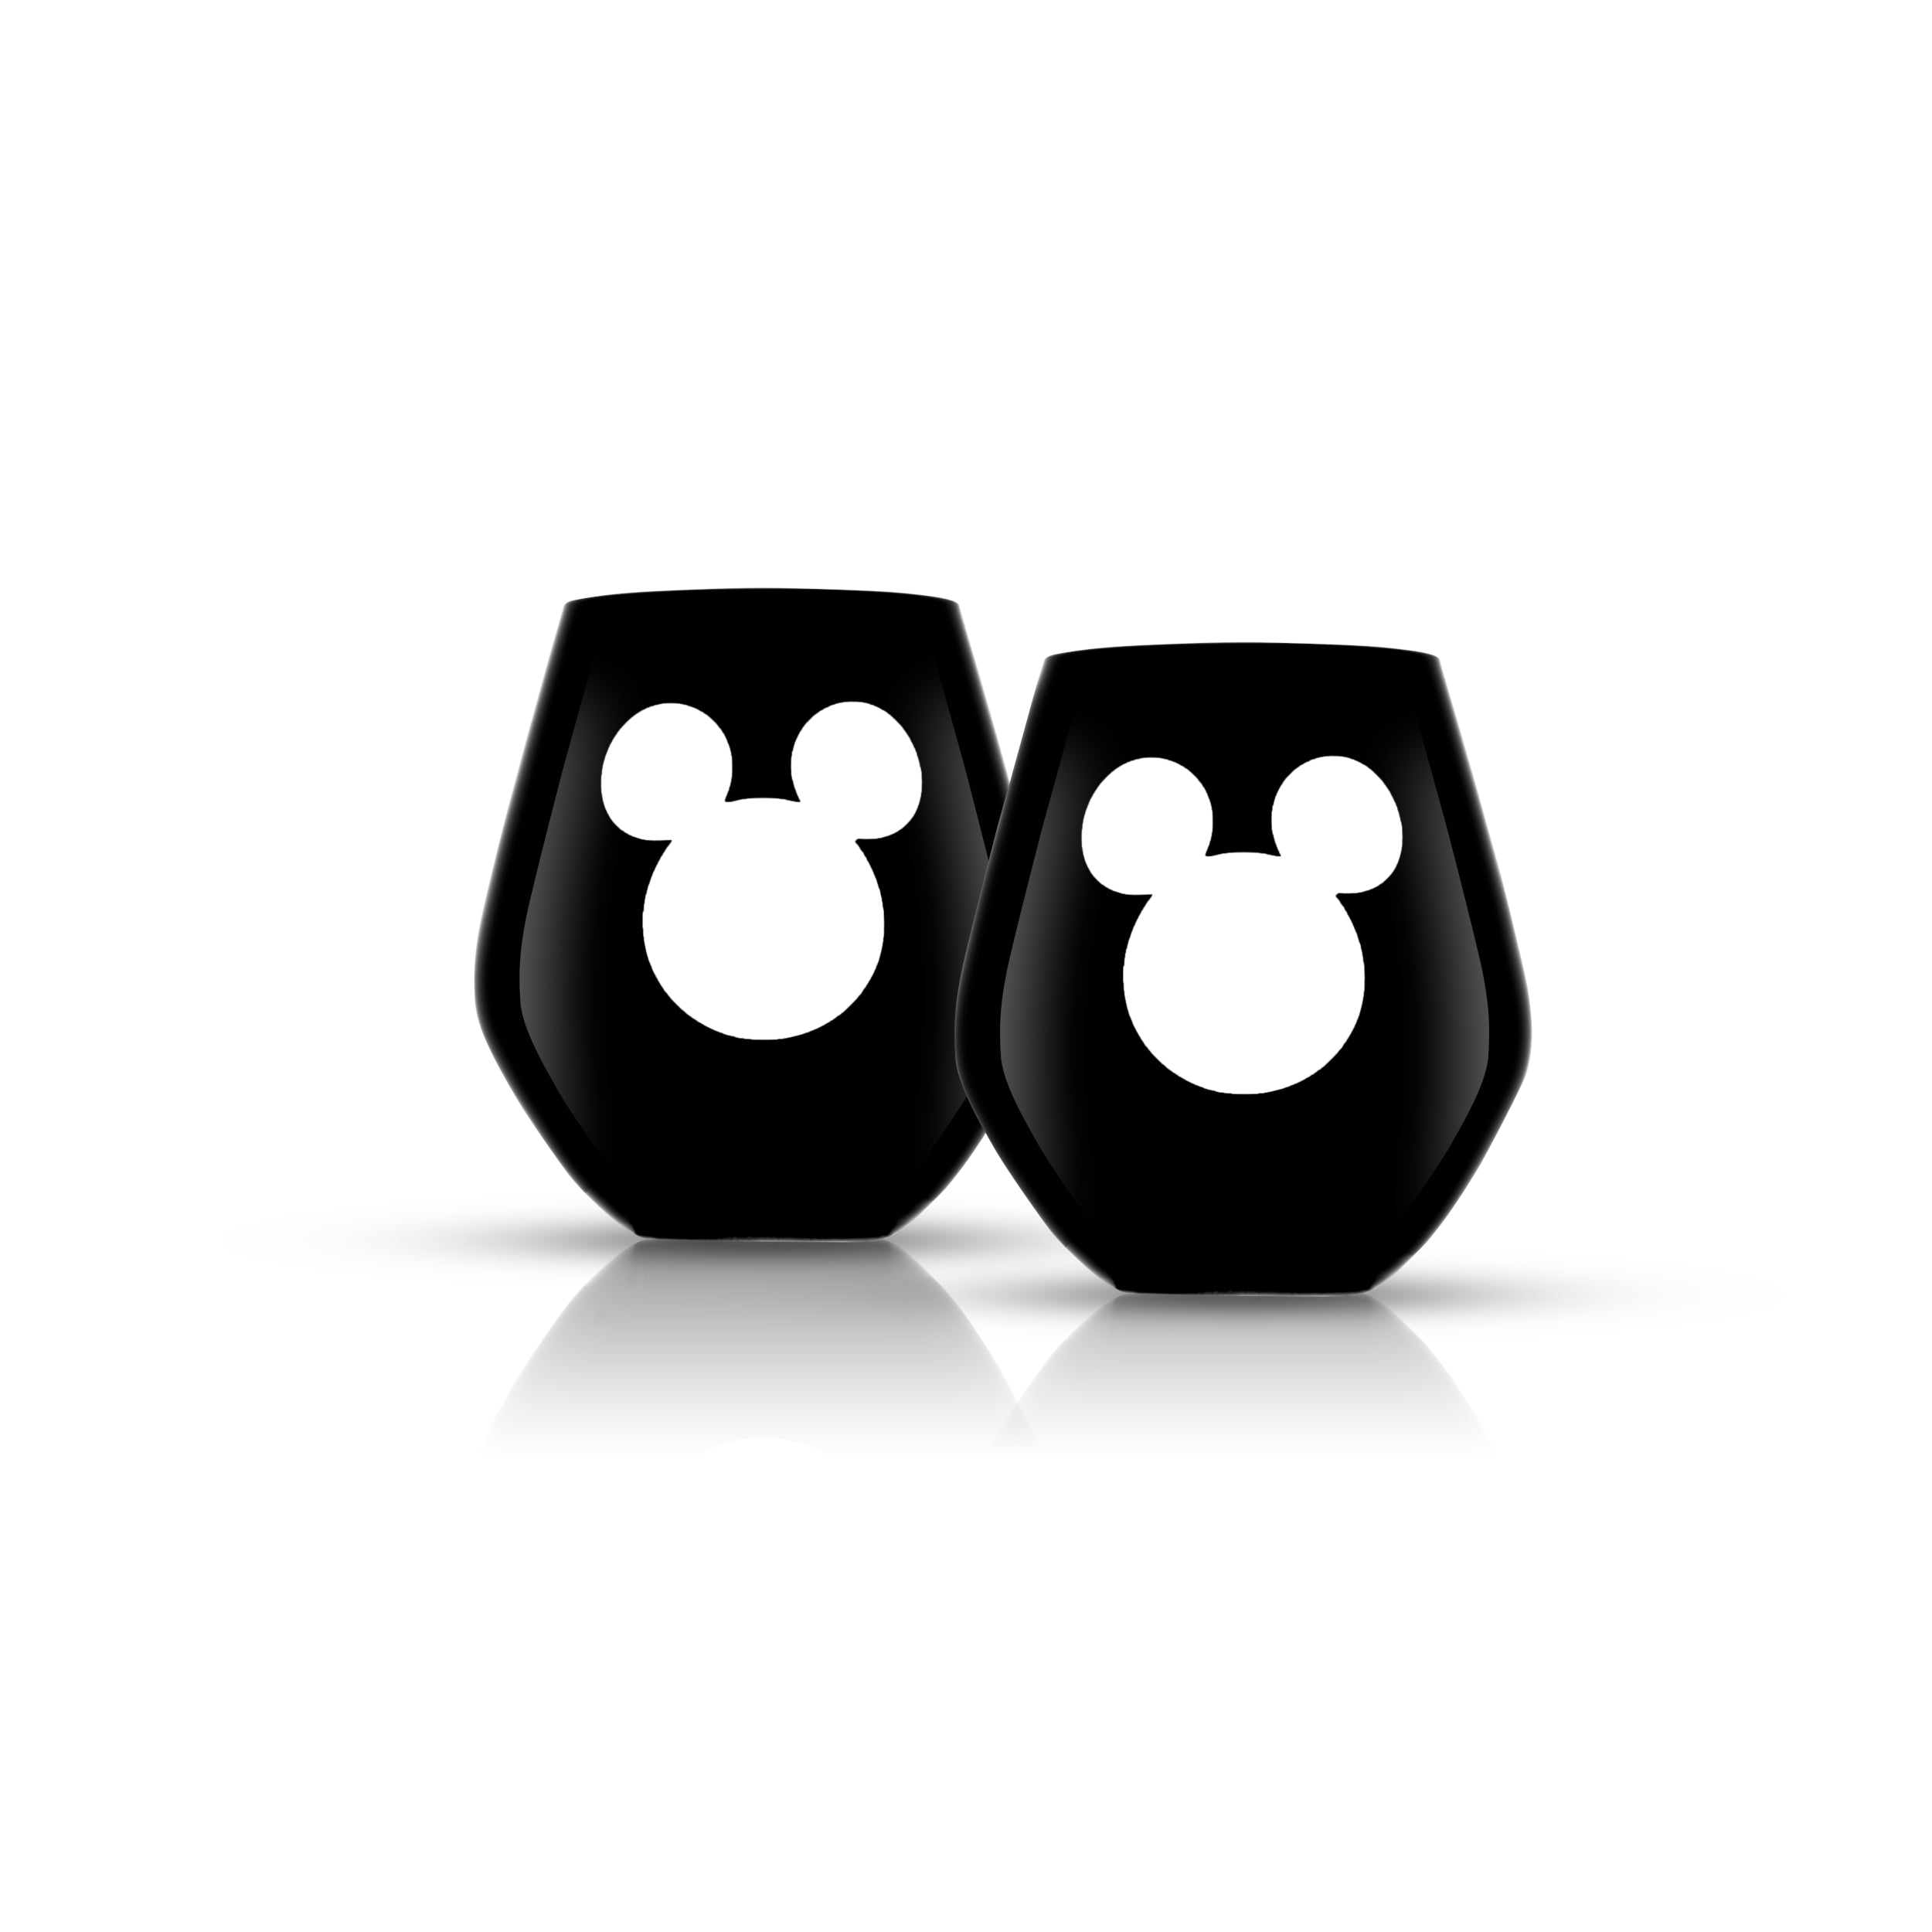 JoyJolt® Disney® Squad 15oz. Mickey Mouse & Pals Looking Backwards Stemless  Wine Glasses, 4ct.